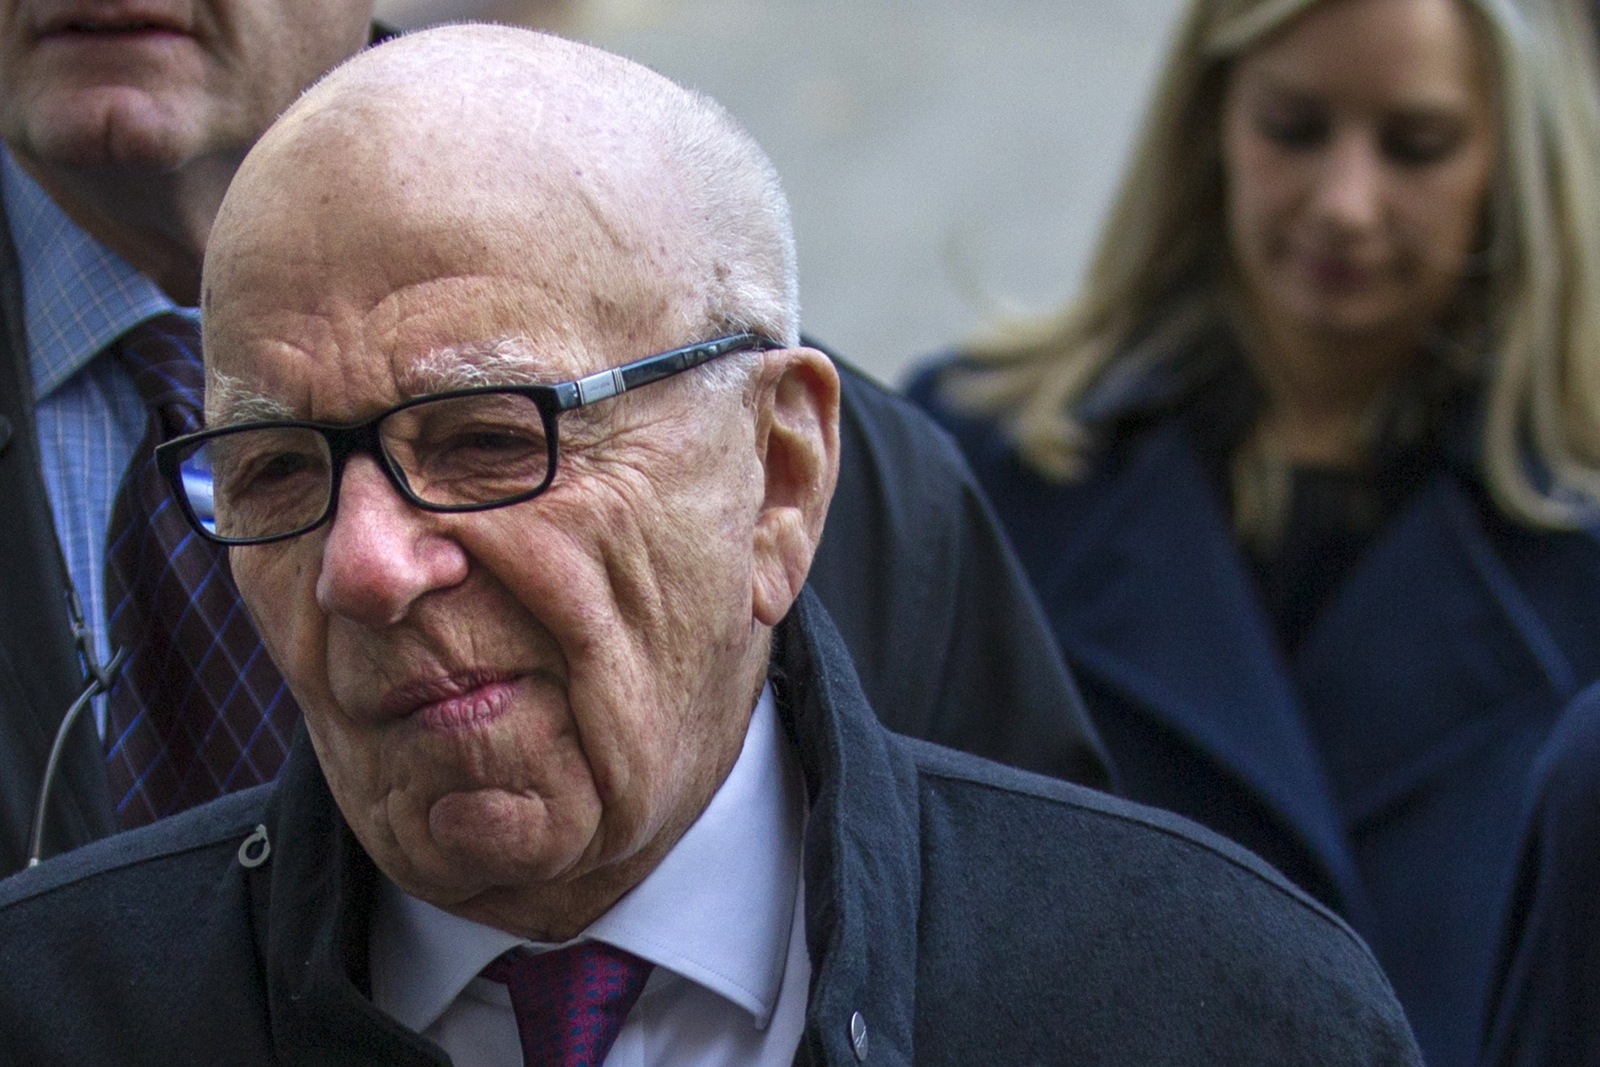 Rupert Murdoch: 21st Century Fox launches Sky PLC takeover bid1600 x 1067